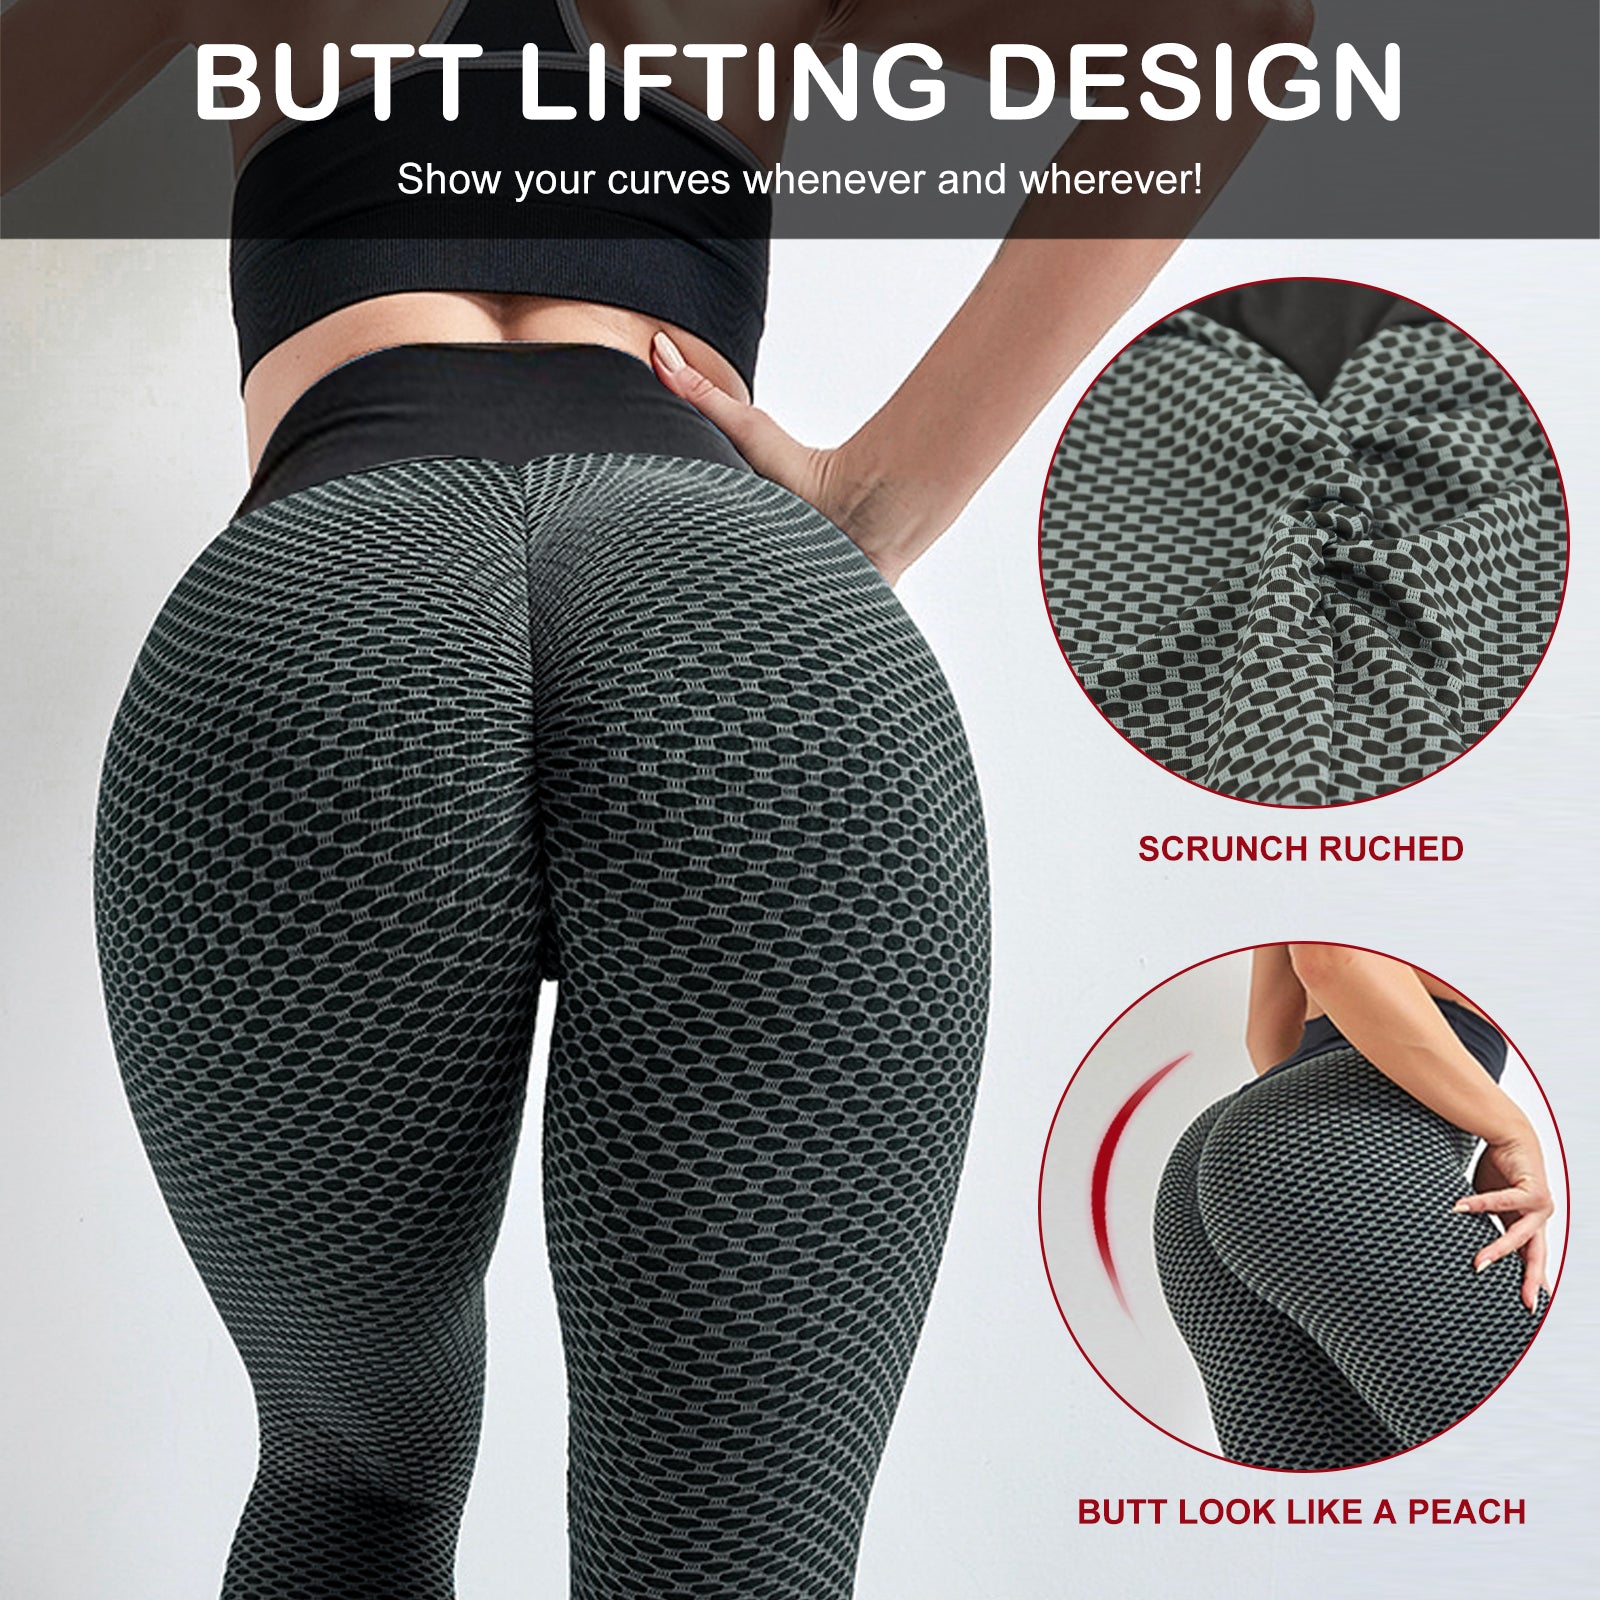 TIK Tok Leggings Women Butt Lifting Workout Tights Plus Size Sports High Waist Yoga Pants Small Amazon Banned - Guy Christopher 